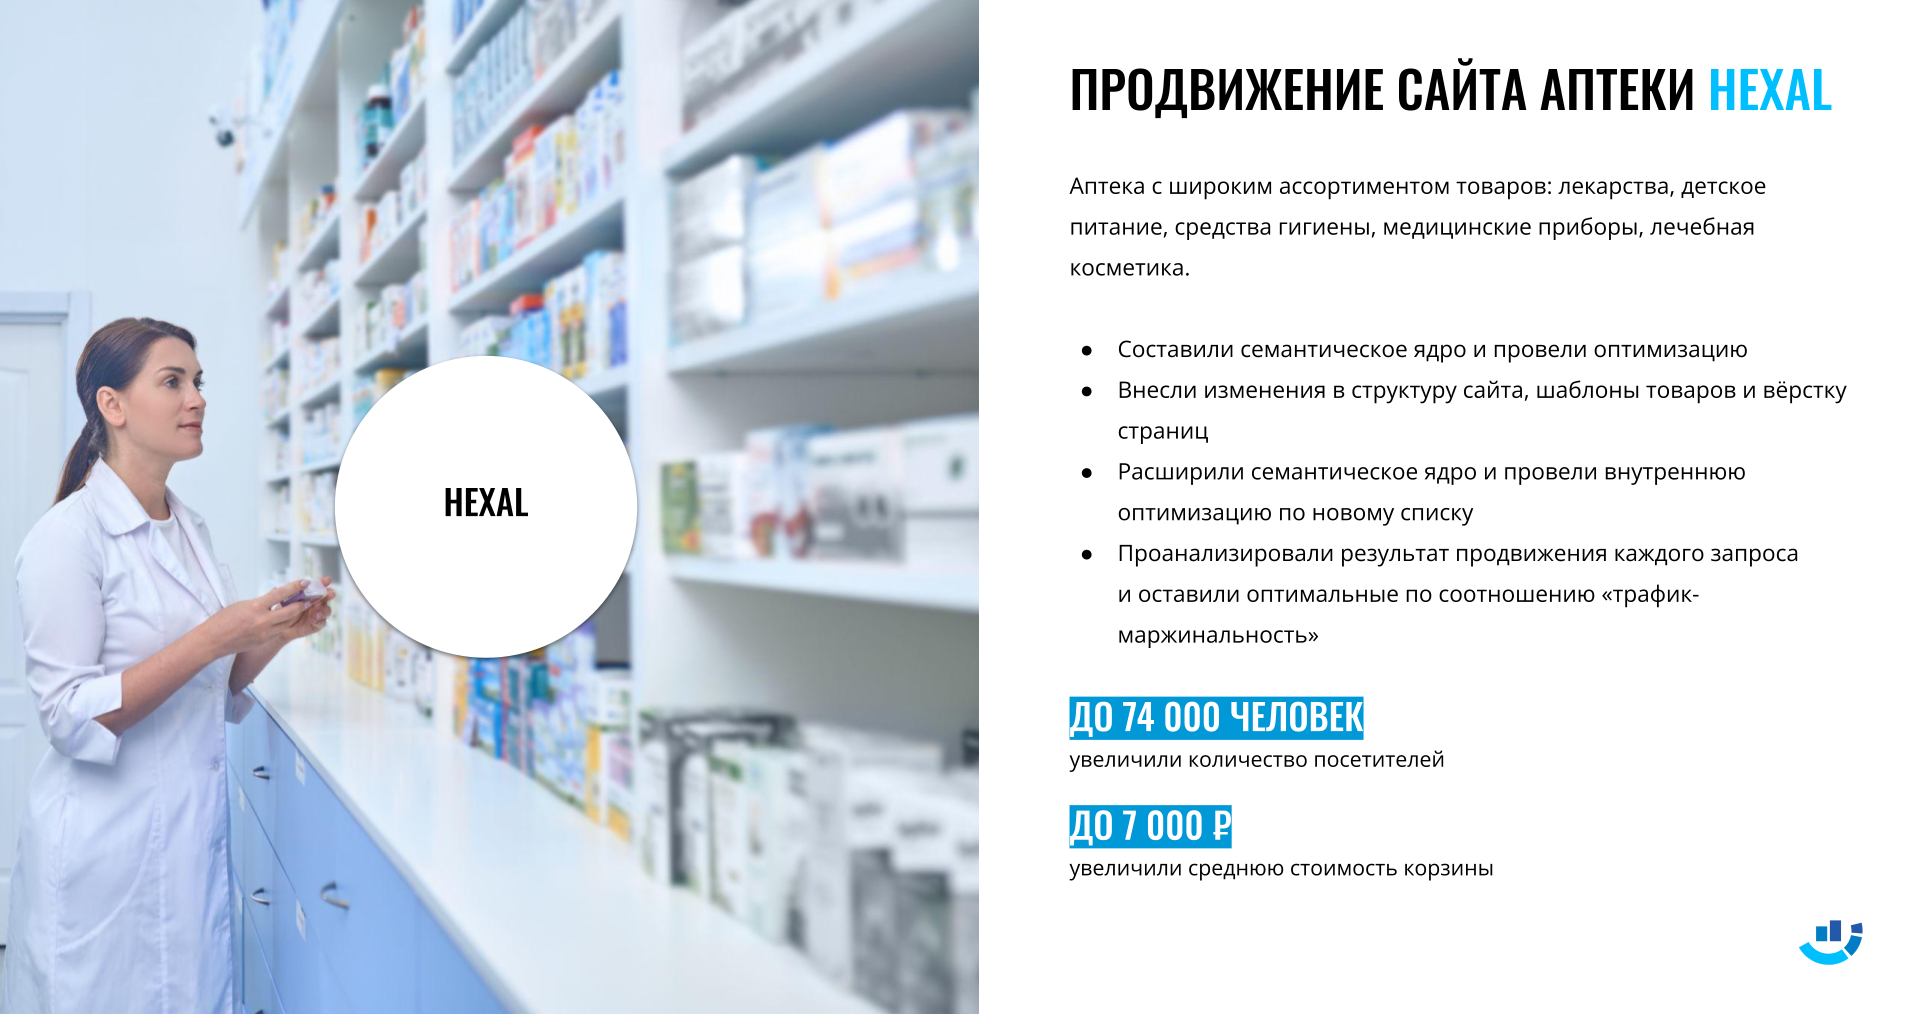 [Кейс] Аптеки и фармацевтика. Продвижение сайта интернет-аптек Hexal